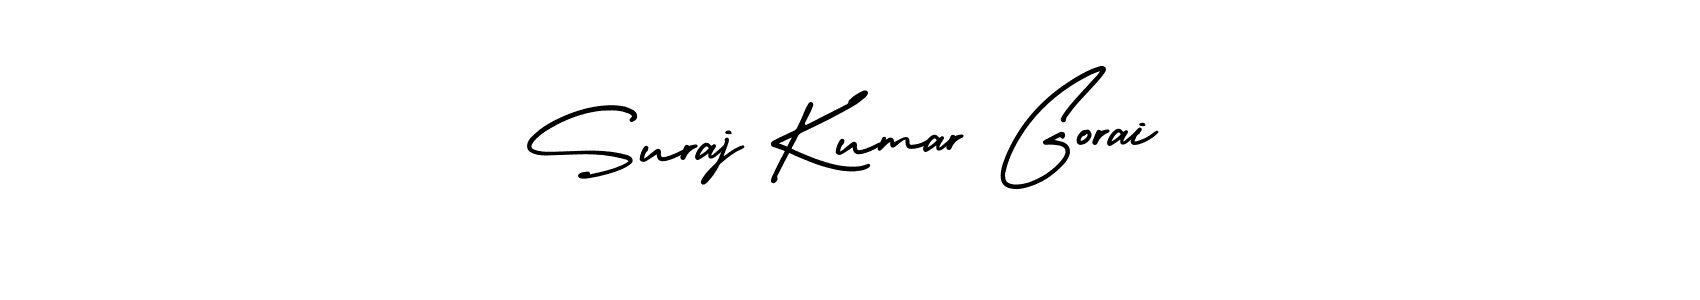 Use a signature maker to create a handwritten signature online. With this signature software, you can design (AmerikaSignatureDemo-Regular) your own signature for name Suraj Kumar Gorai. Suraj Kumar Gorai signature style 3 images and pictures png